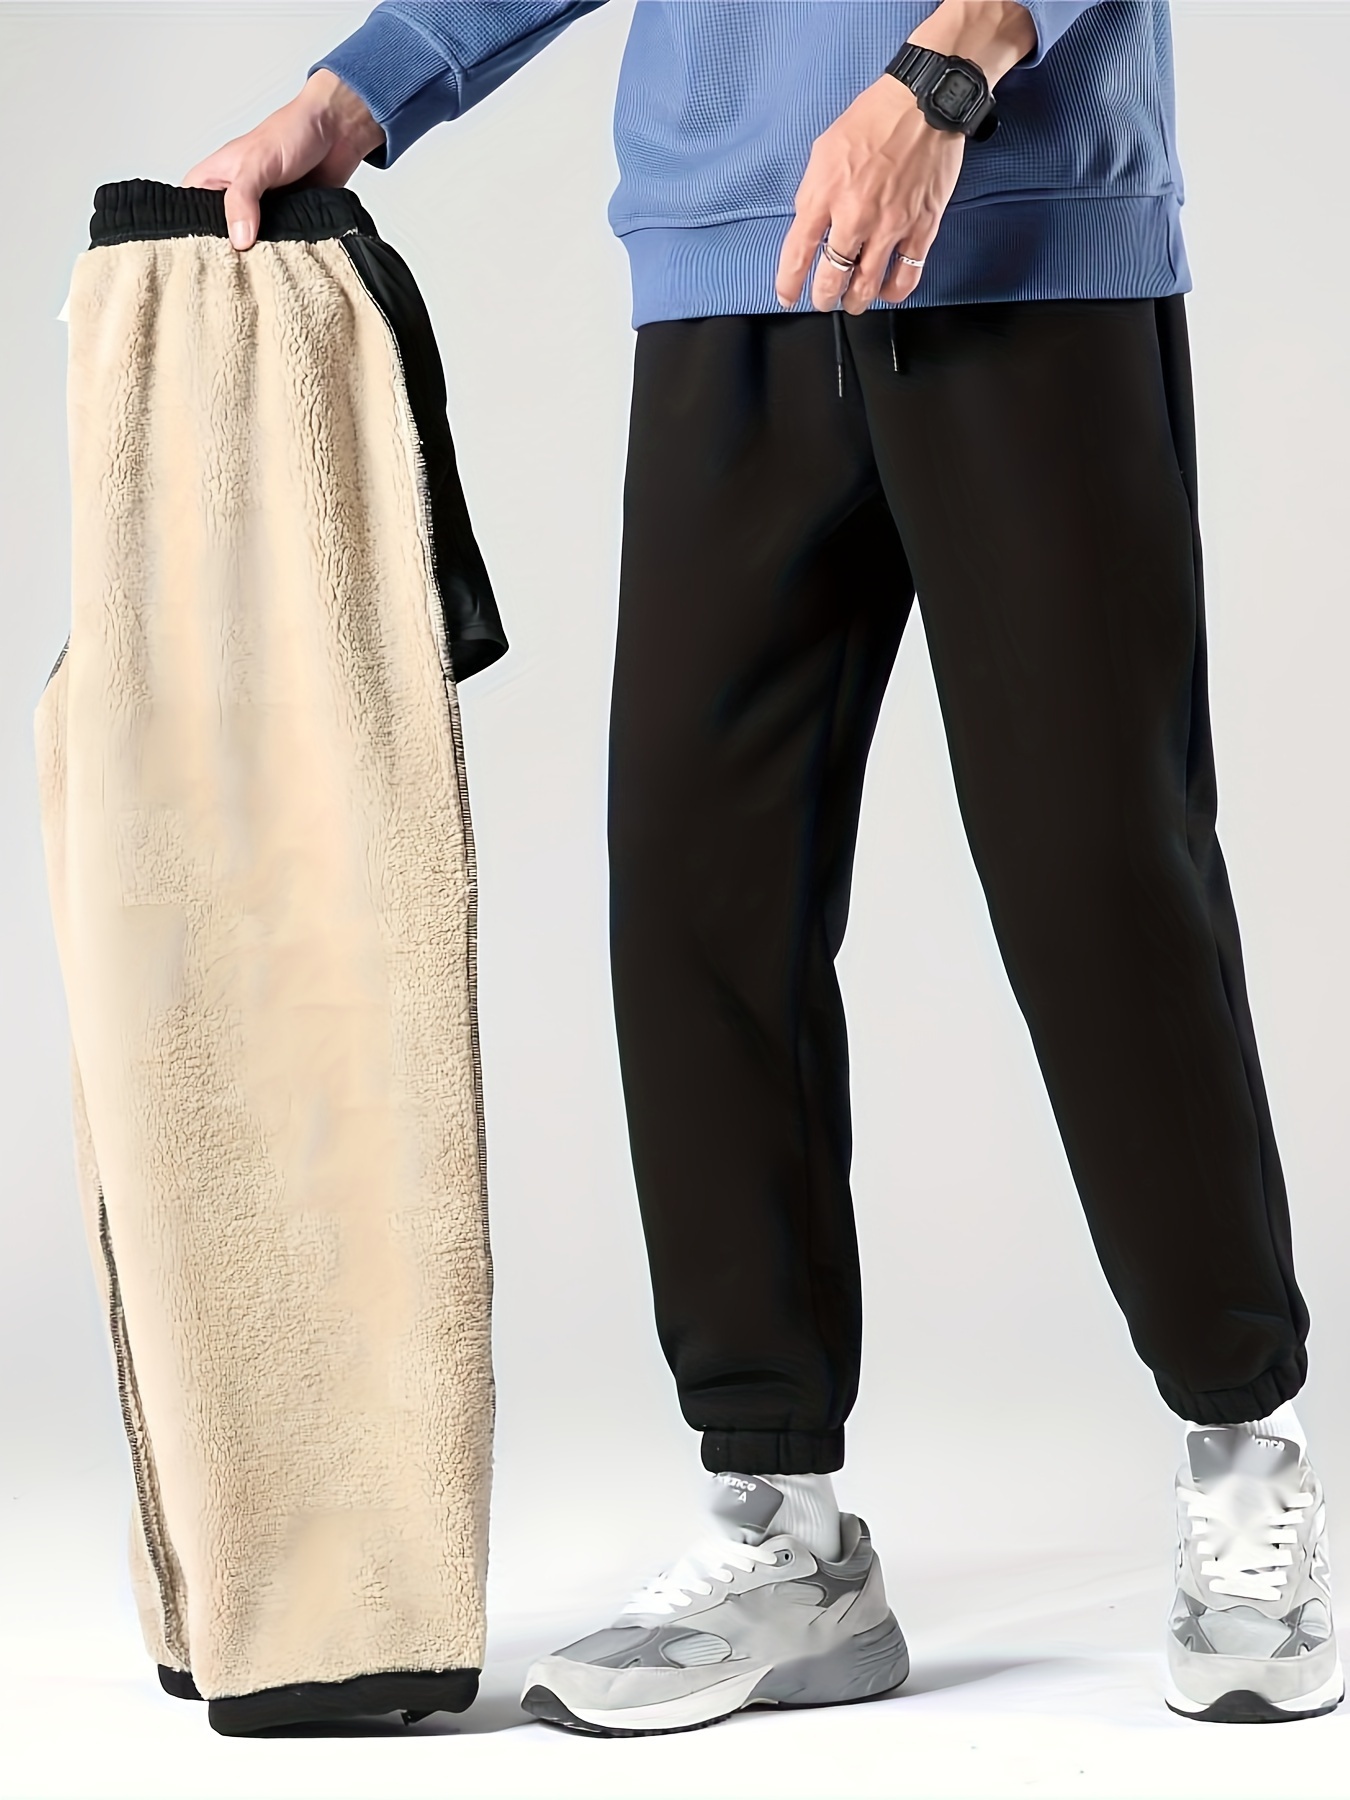 Generic Women's Fleece Lined Pants Warm Thick Casual Sports Sweat